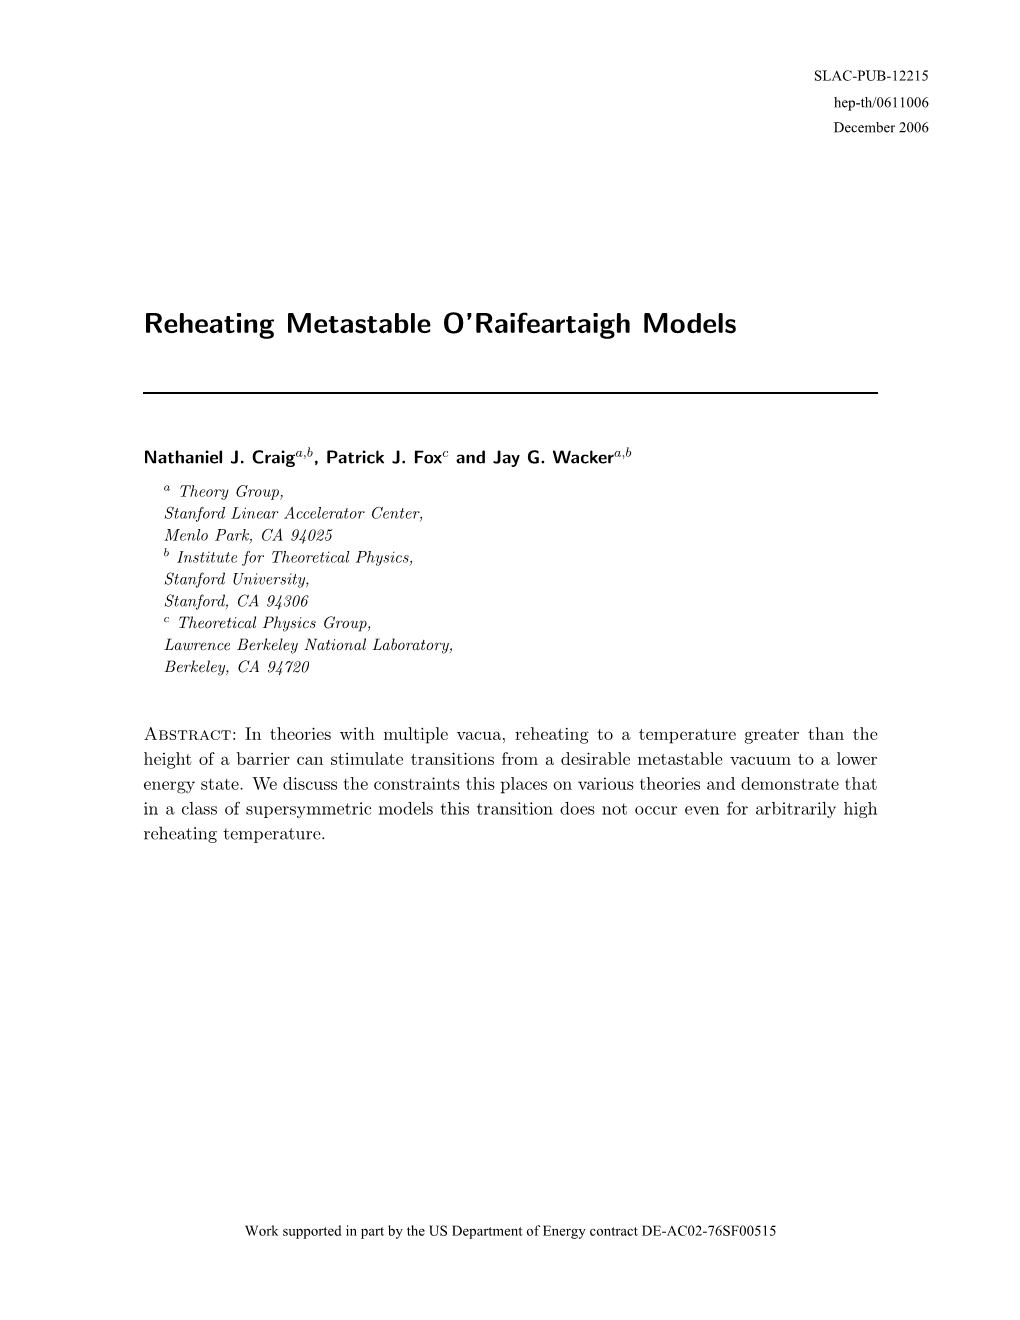 Reheating Metastable O'raifeartaigh Models